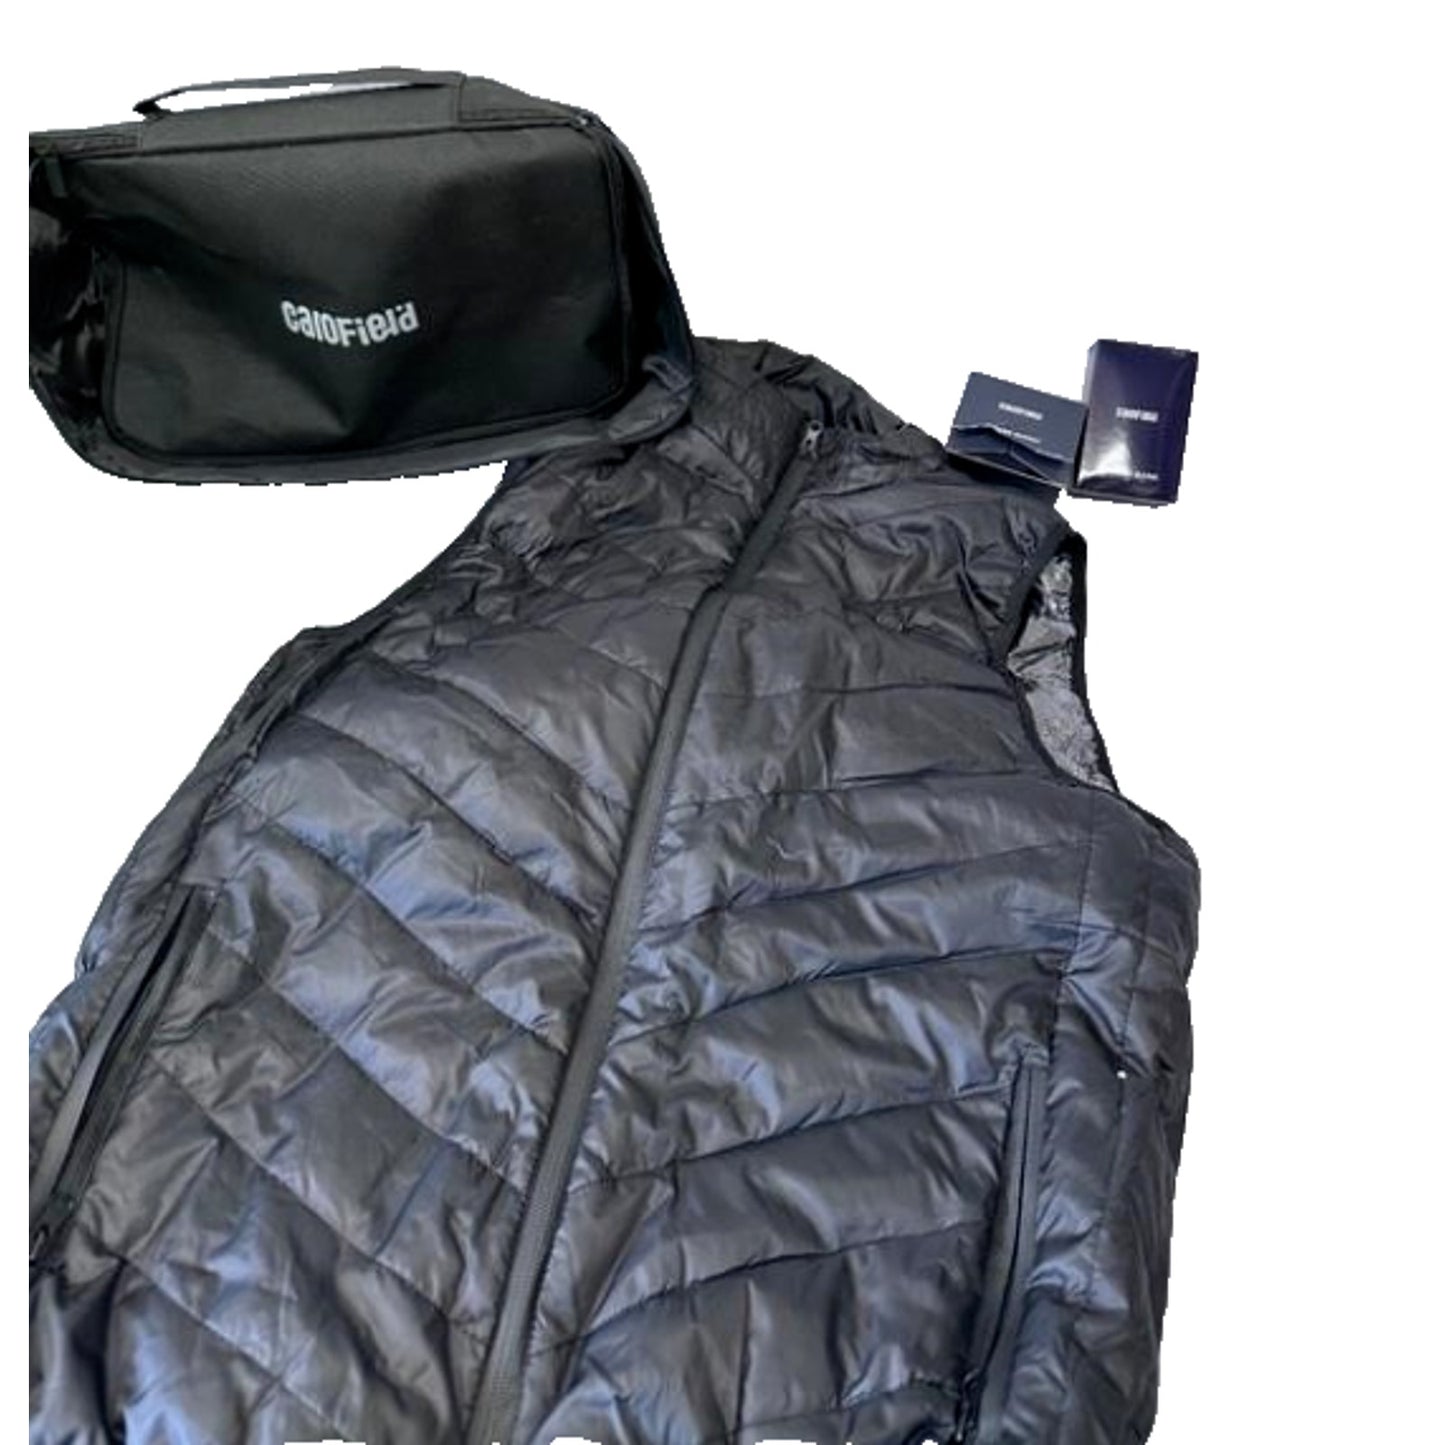 CaroField Men's Heated Vest W/Battery Pack Black